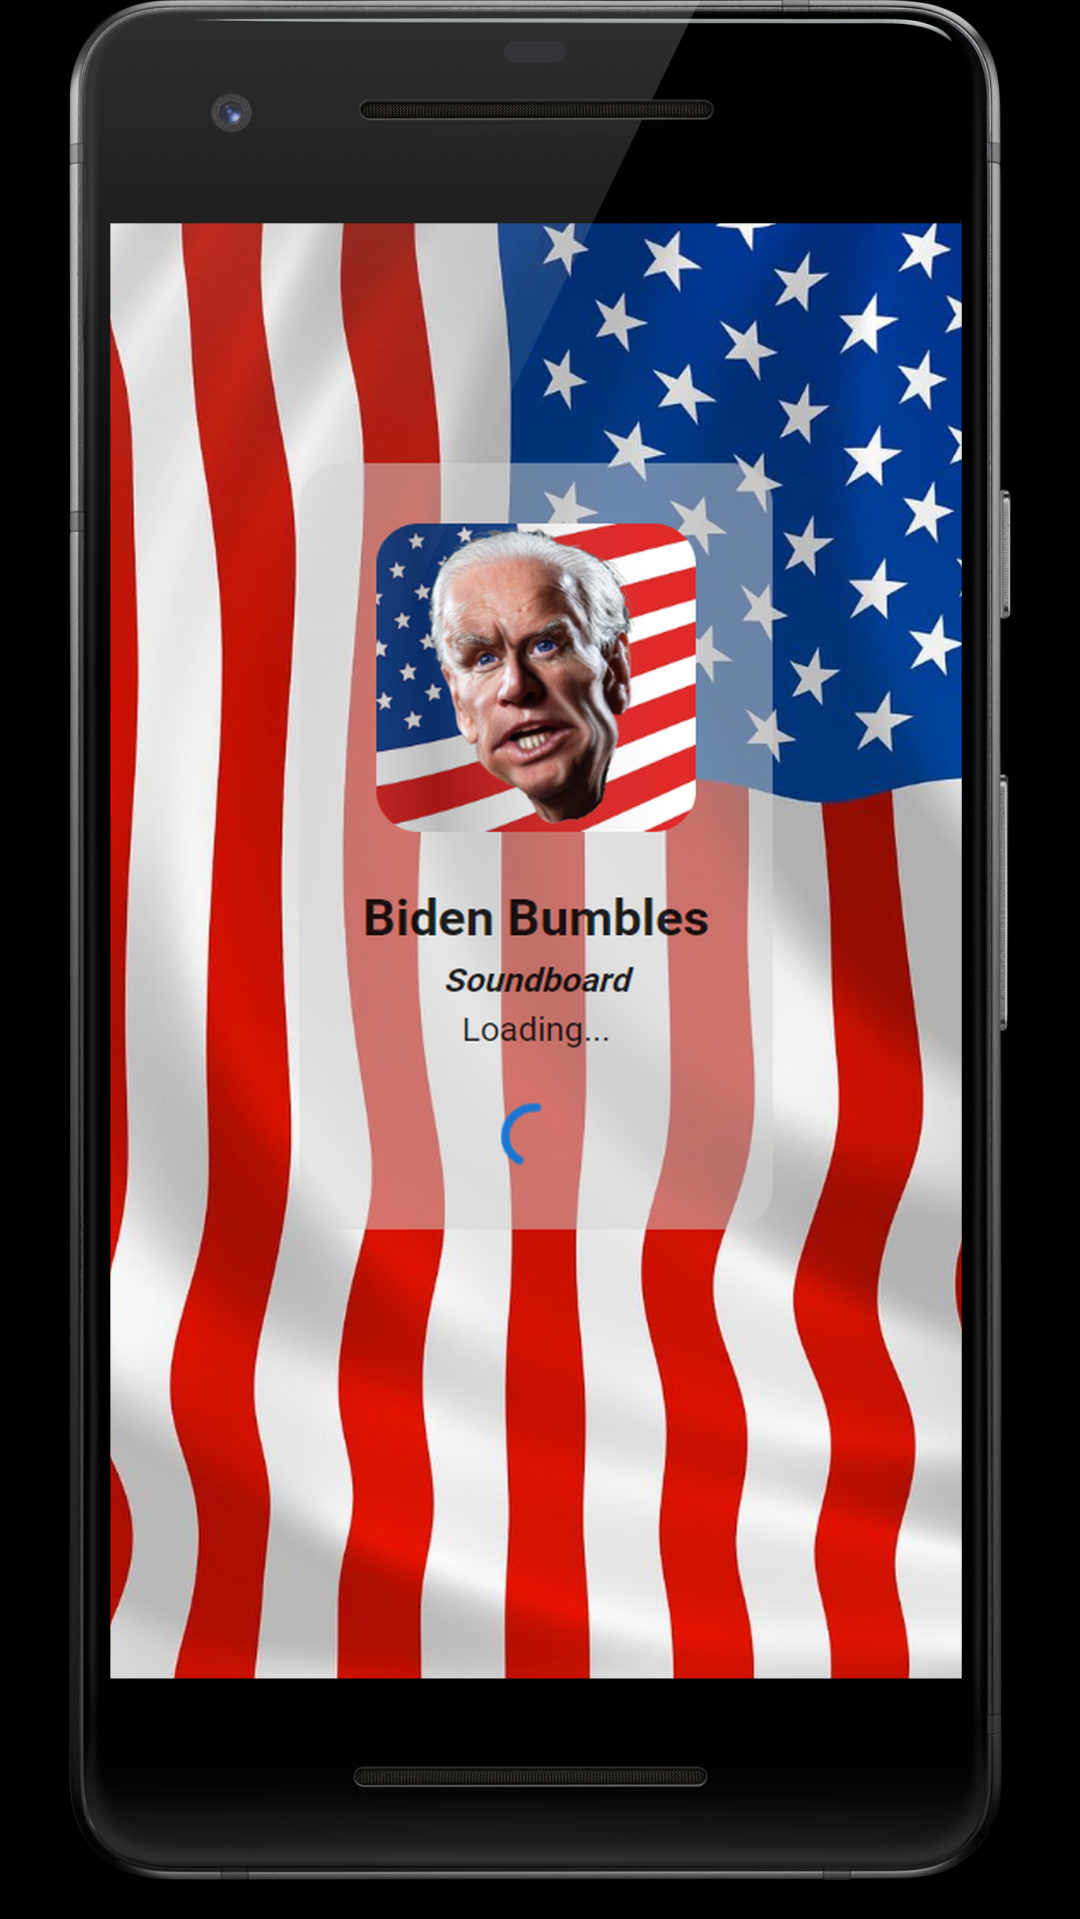 Biden Bumbles SoundboardAmazoncomAppstore for Android